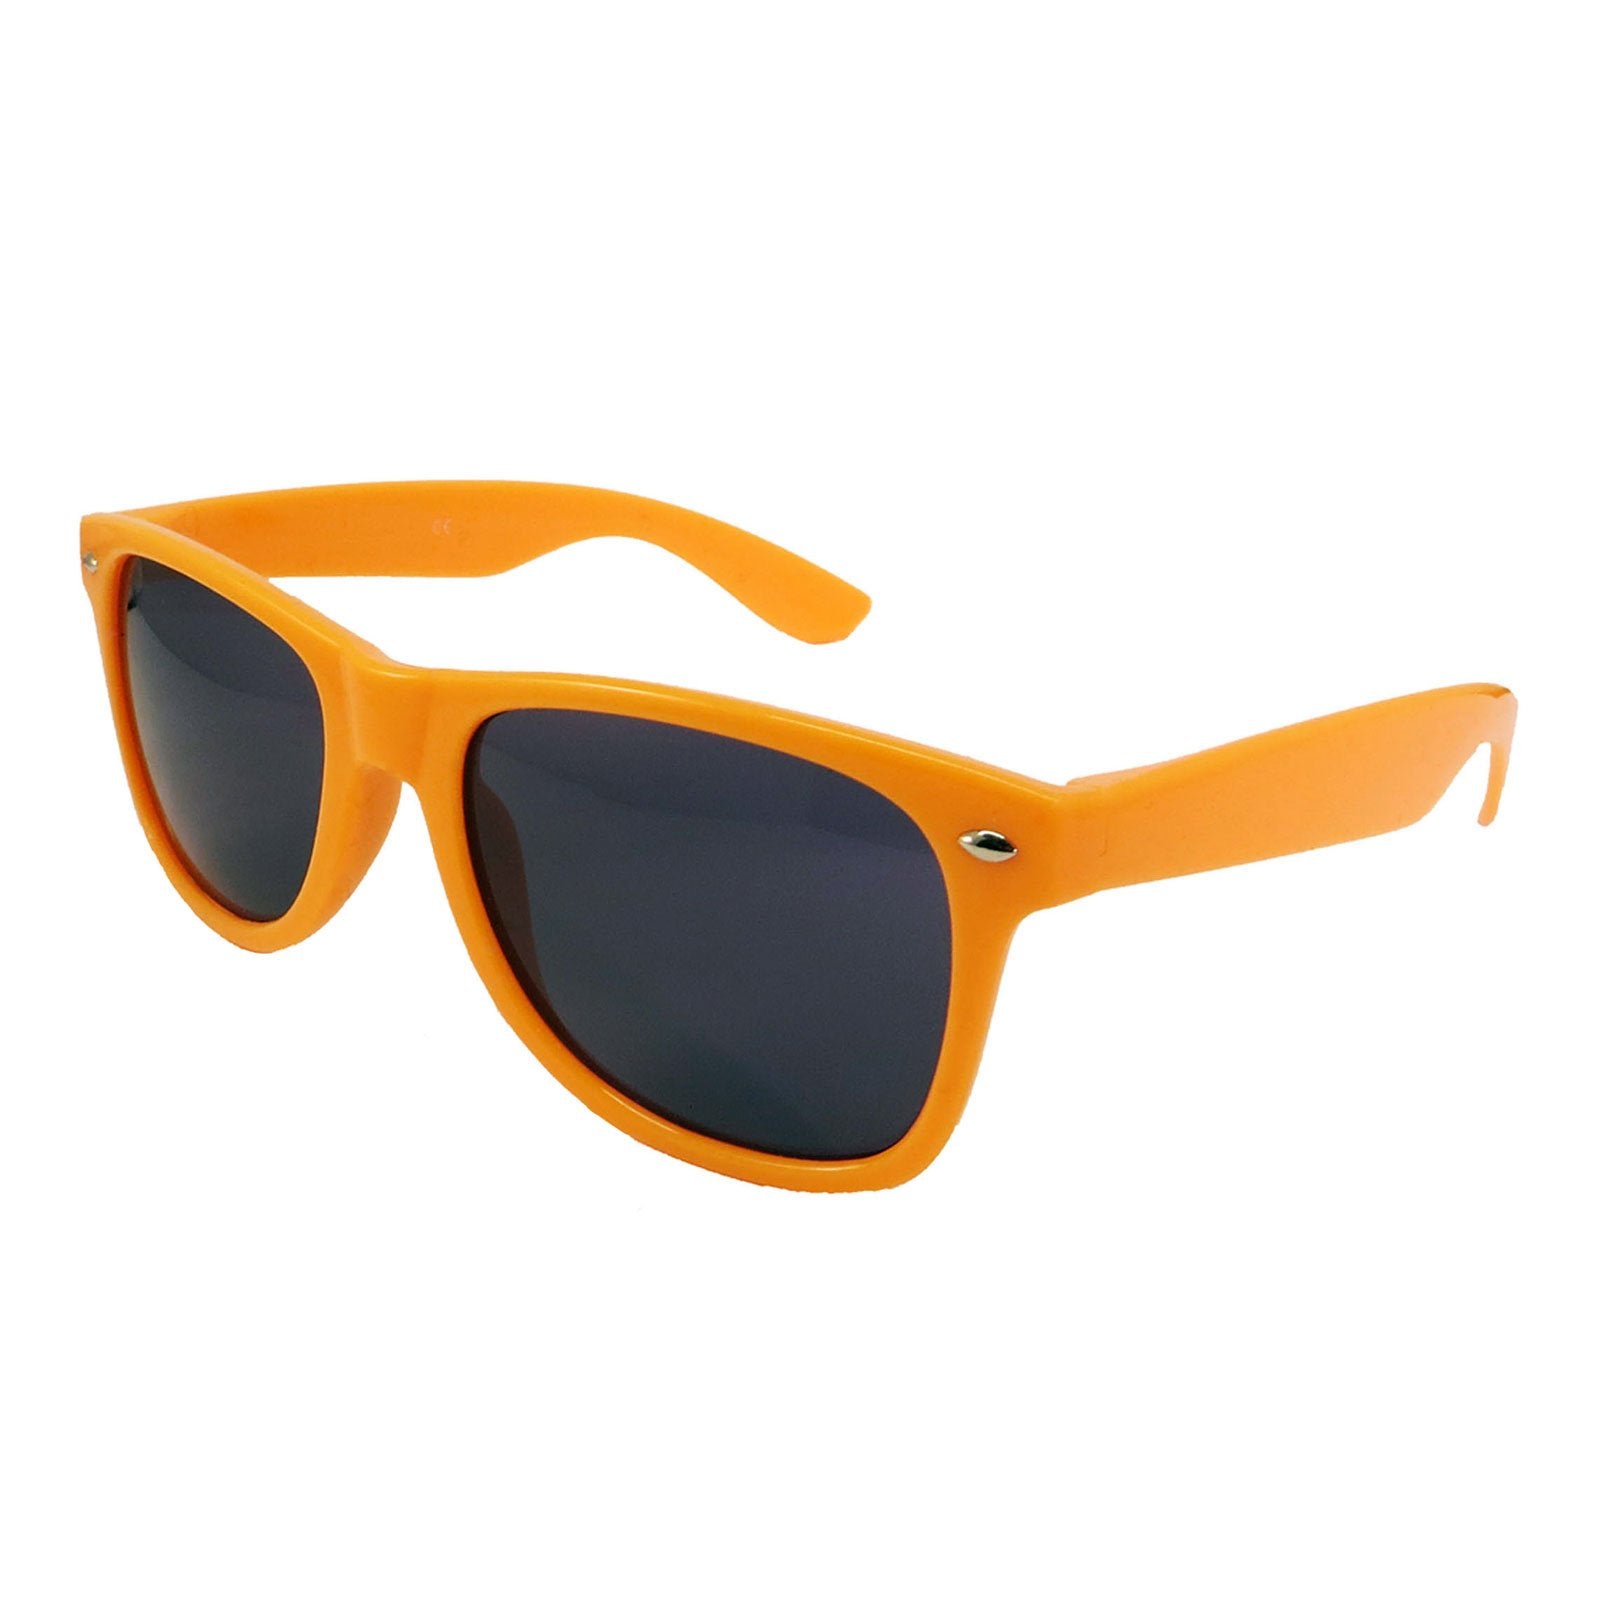 Wholesale Kids Classic Sunglasses - Light Orange Frame, Black Lens